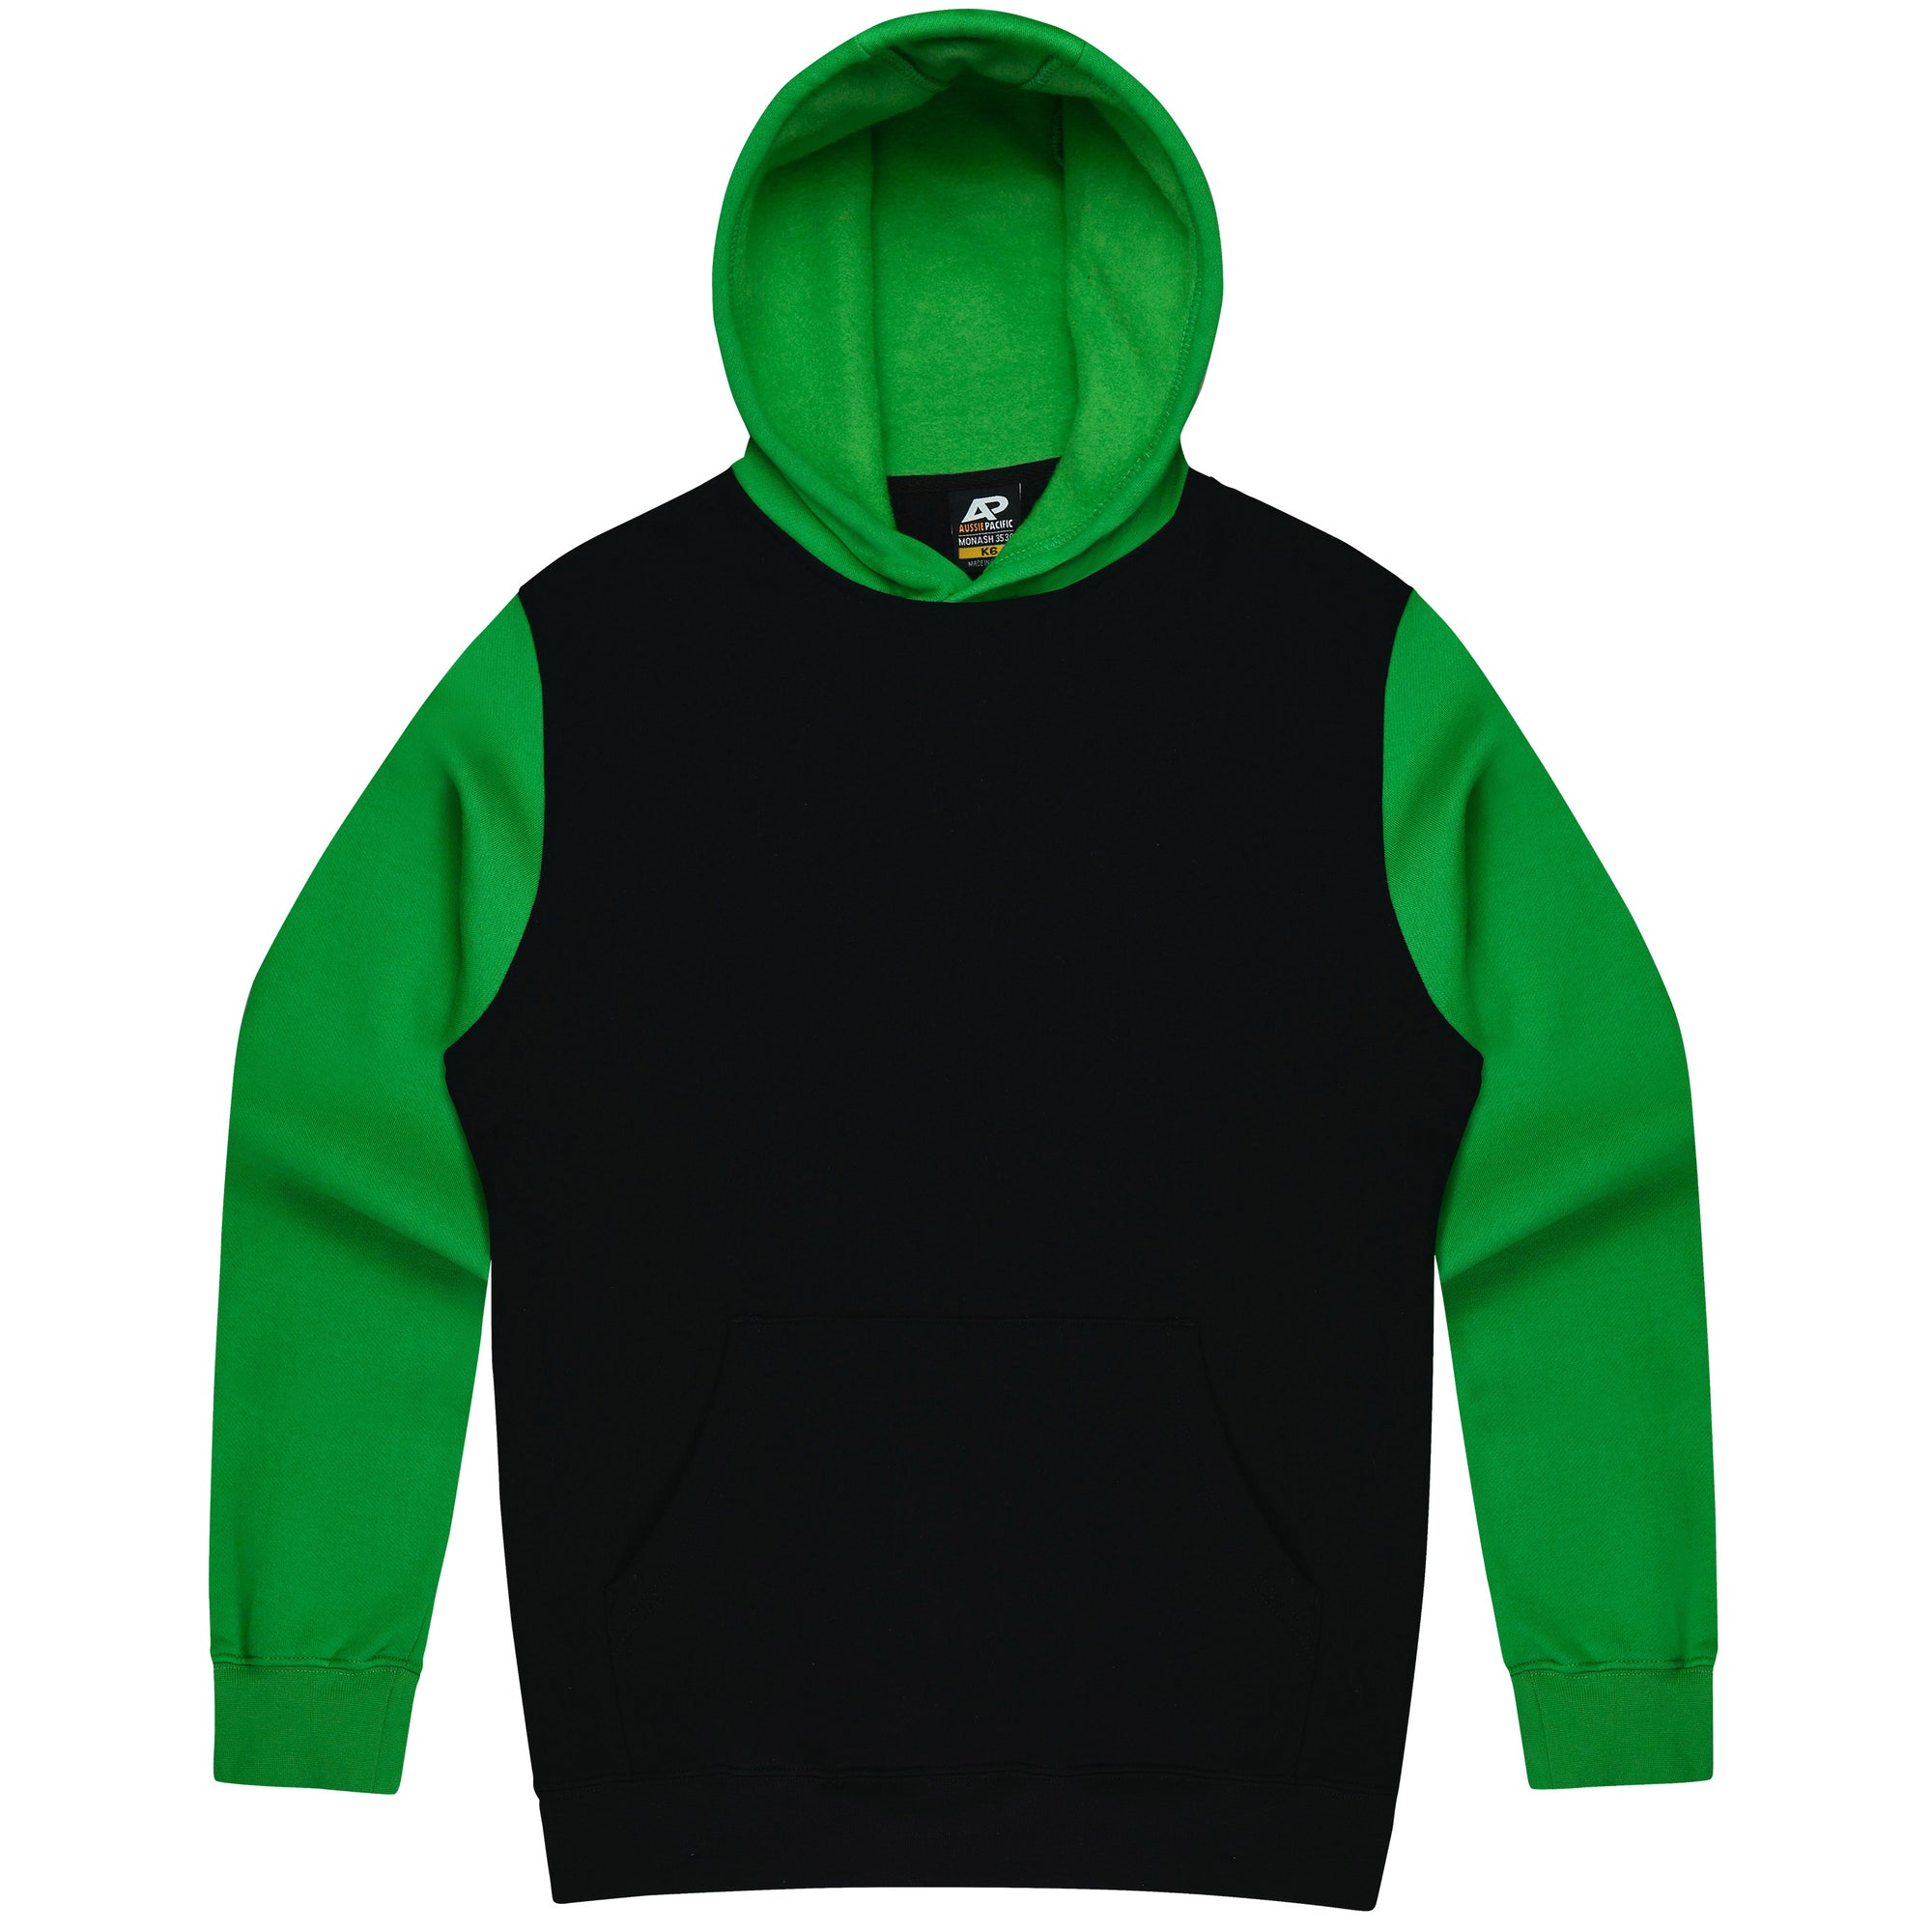 Custom Printed Monash Hoodies - Black/Kawa Green